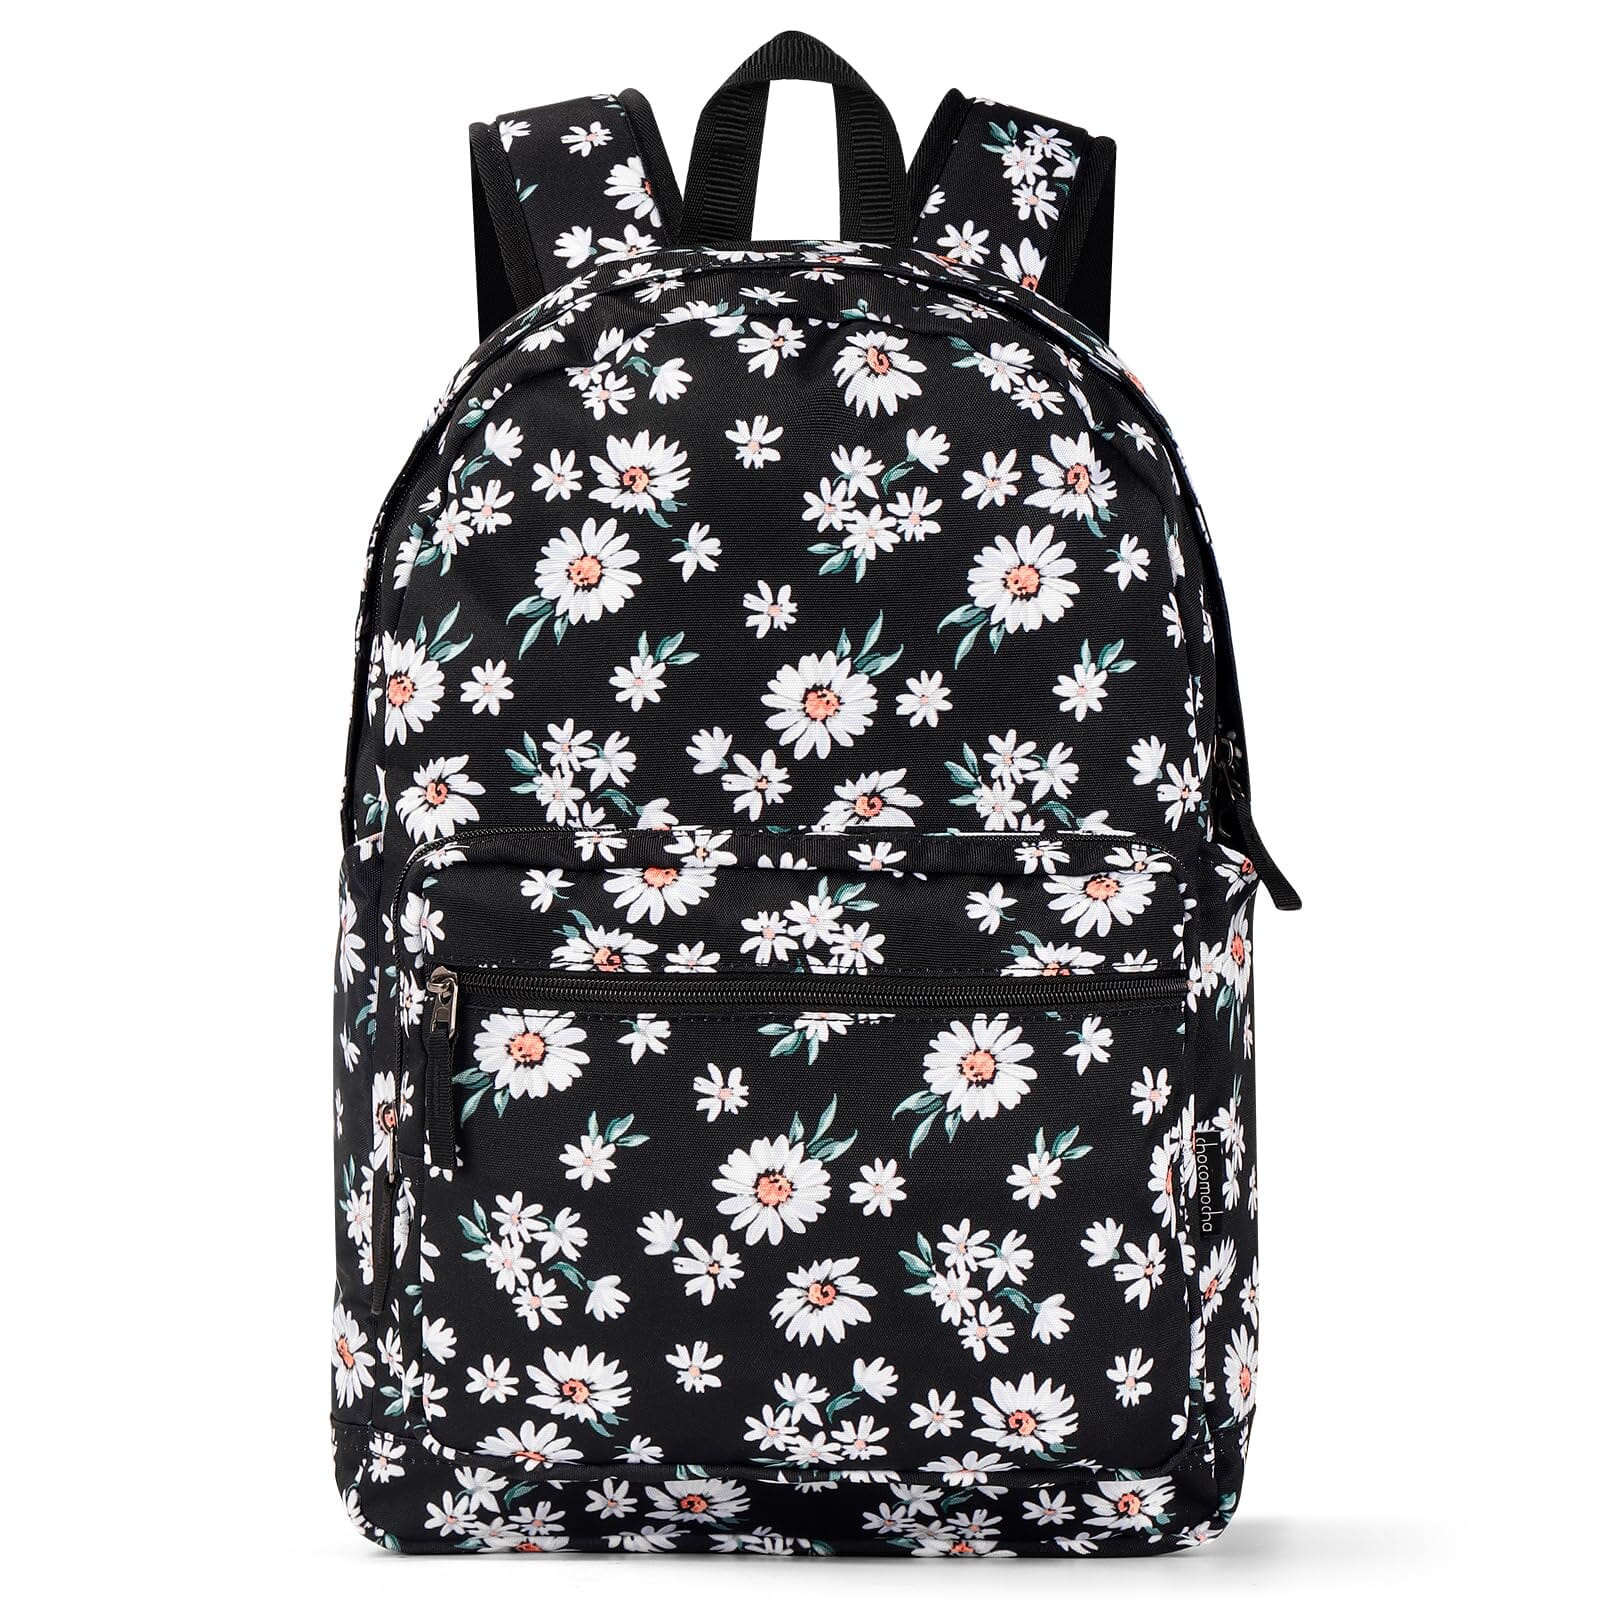 Choco Mocha Daisy Backpack for Girls Travel School Backpack 17 Inch, Black chocomochakids 